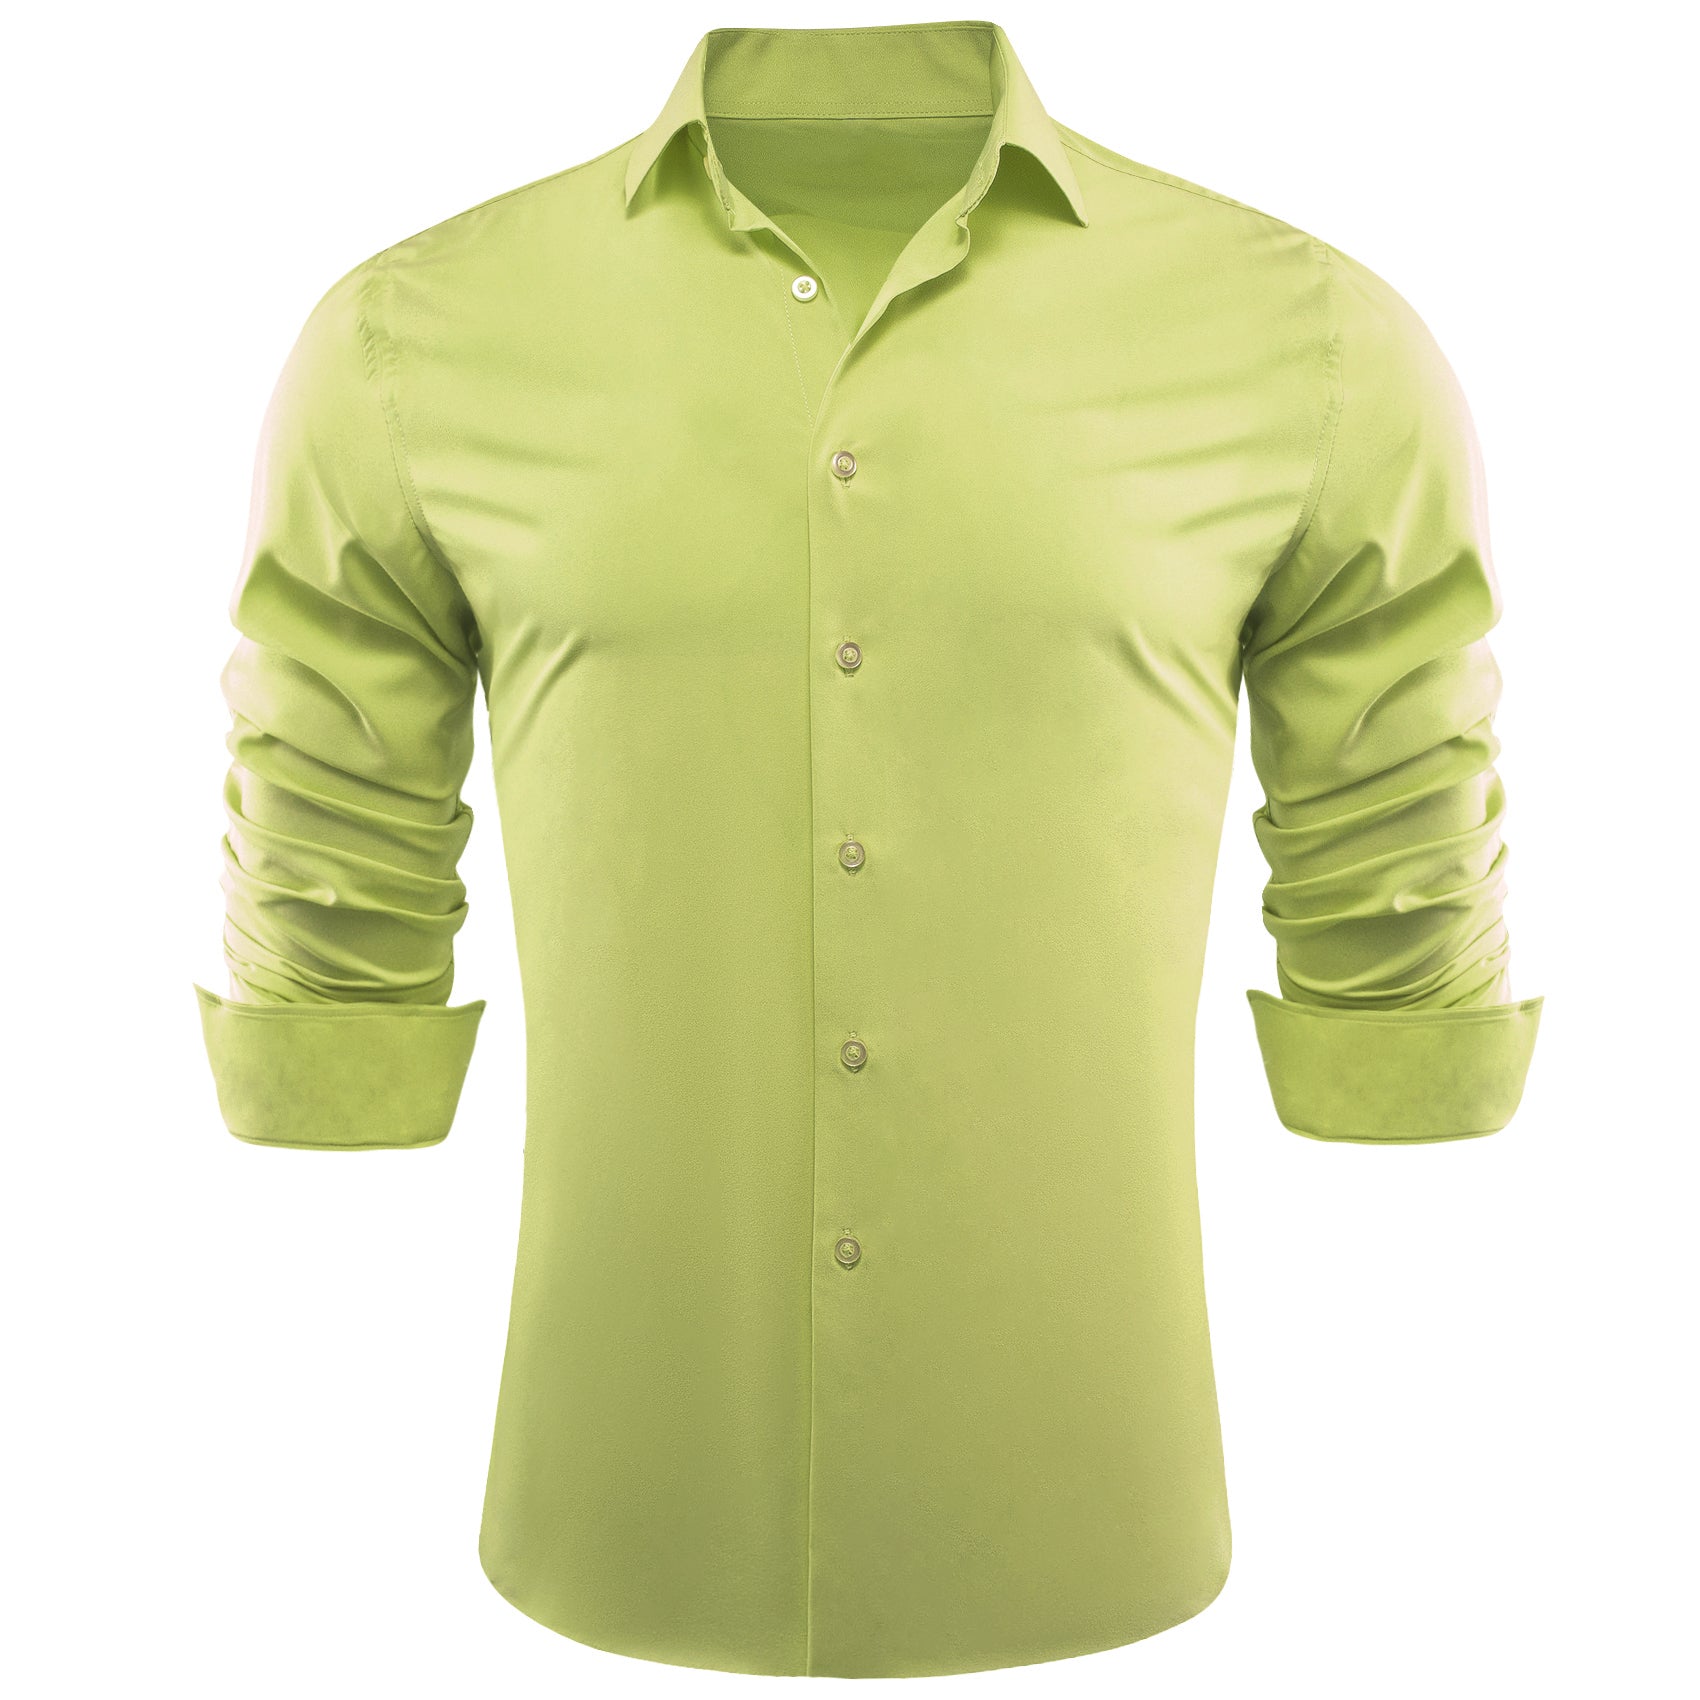 Barry.wang Yellow Green Solid Silk Shirt